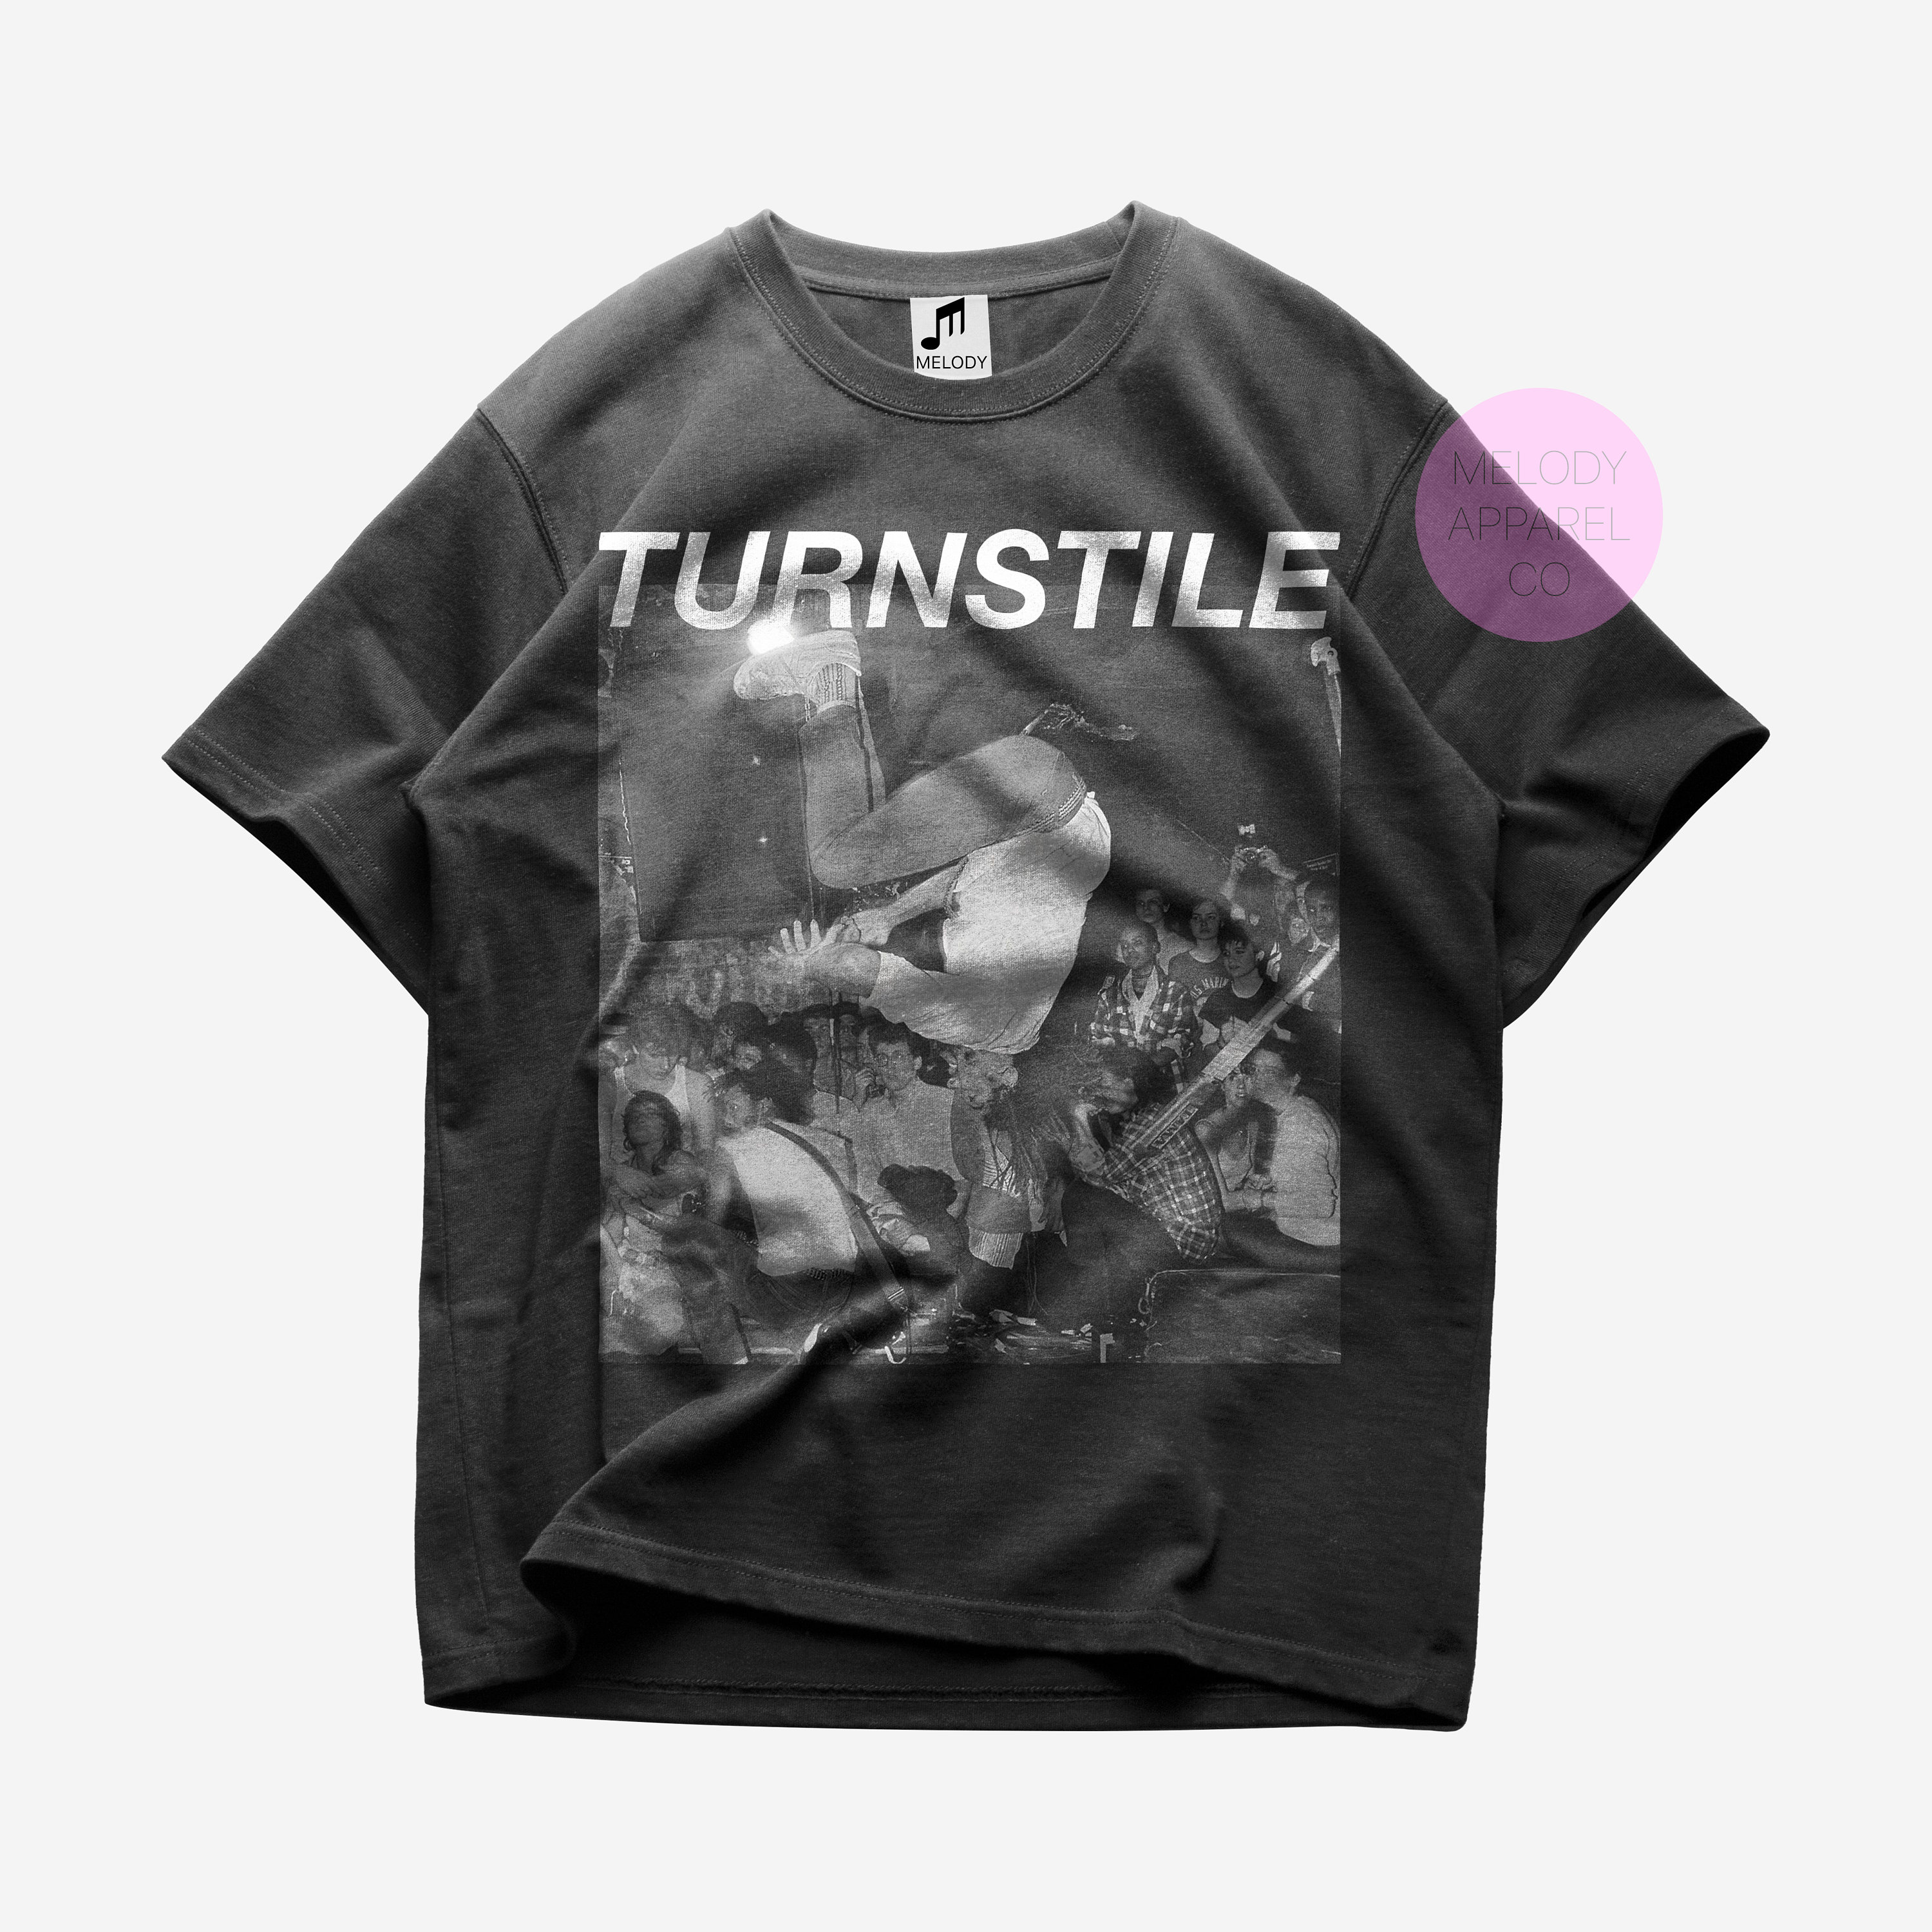 Discover Turnstile T-shirt - Turnstile Glow On T-shirt